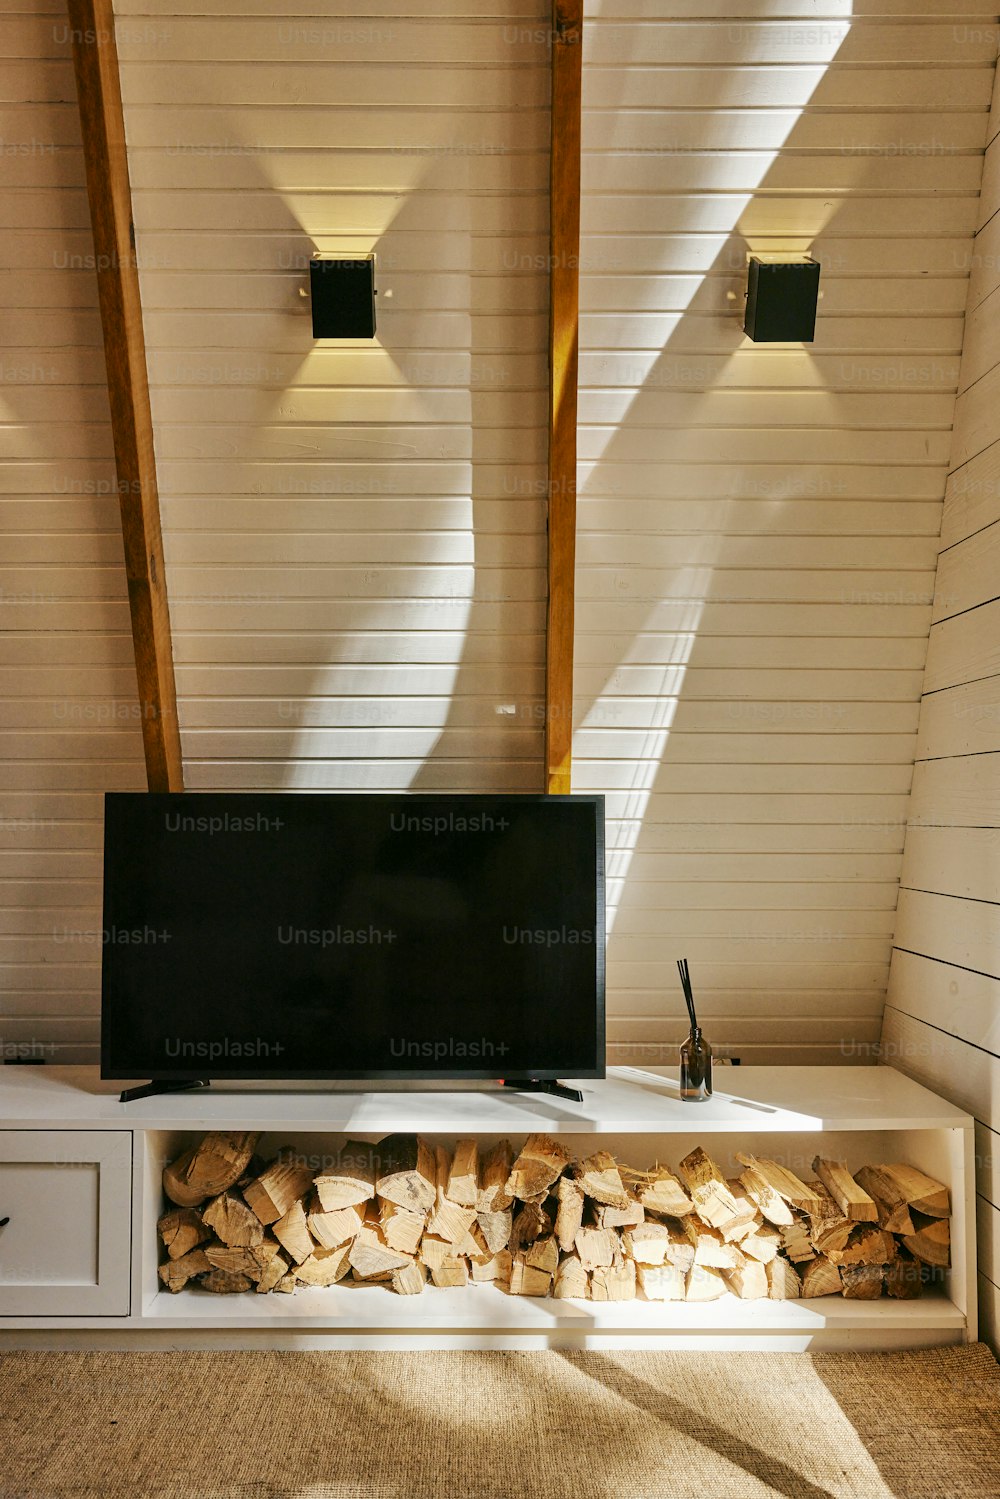 Un televisor de pantalla plana sentado encima de un estante de madera